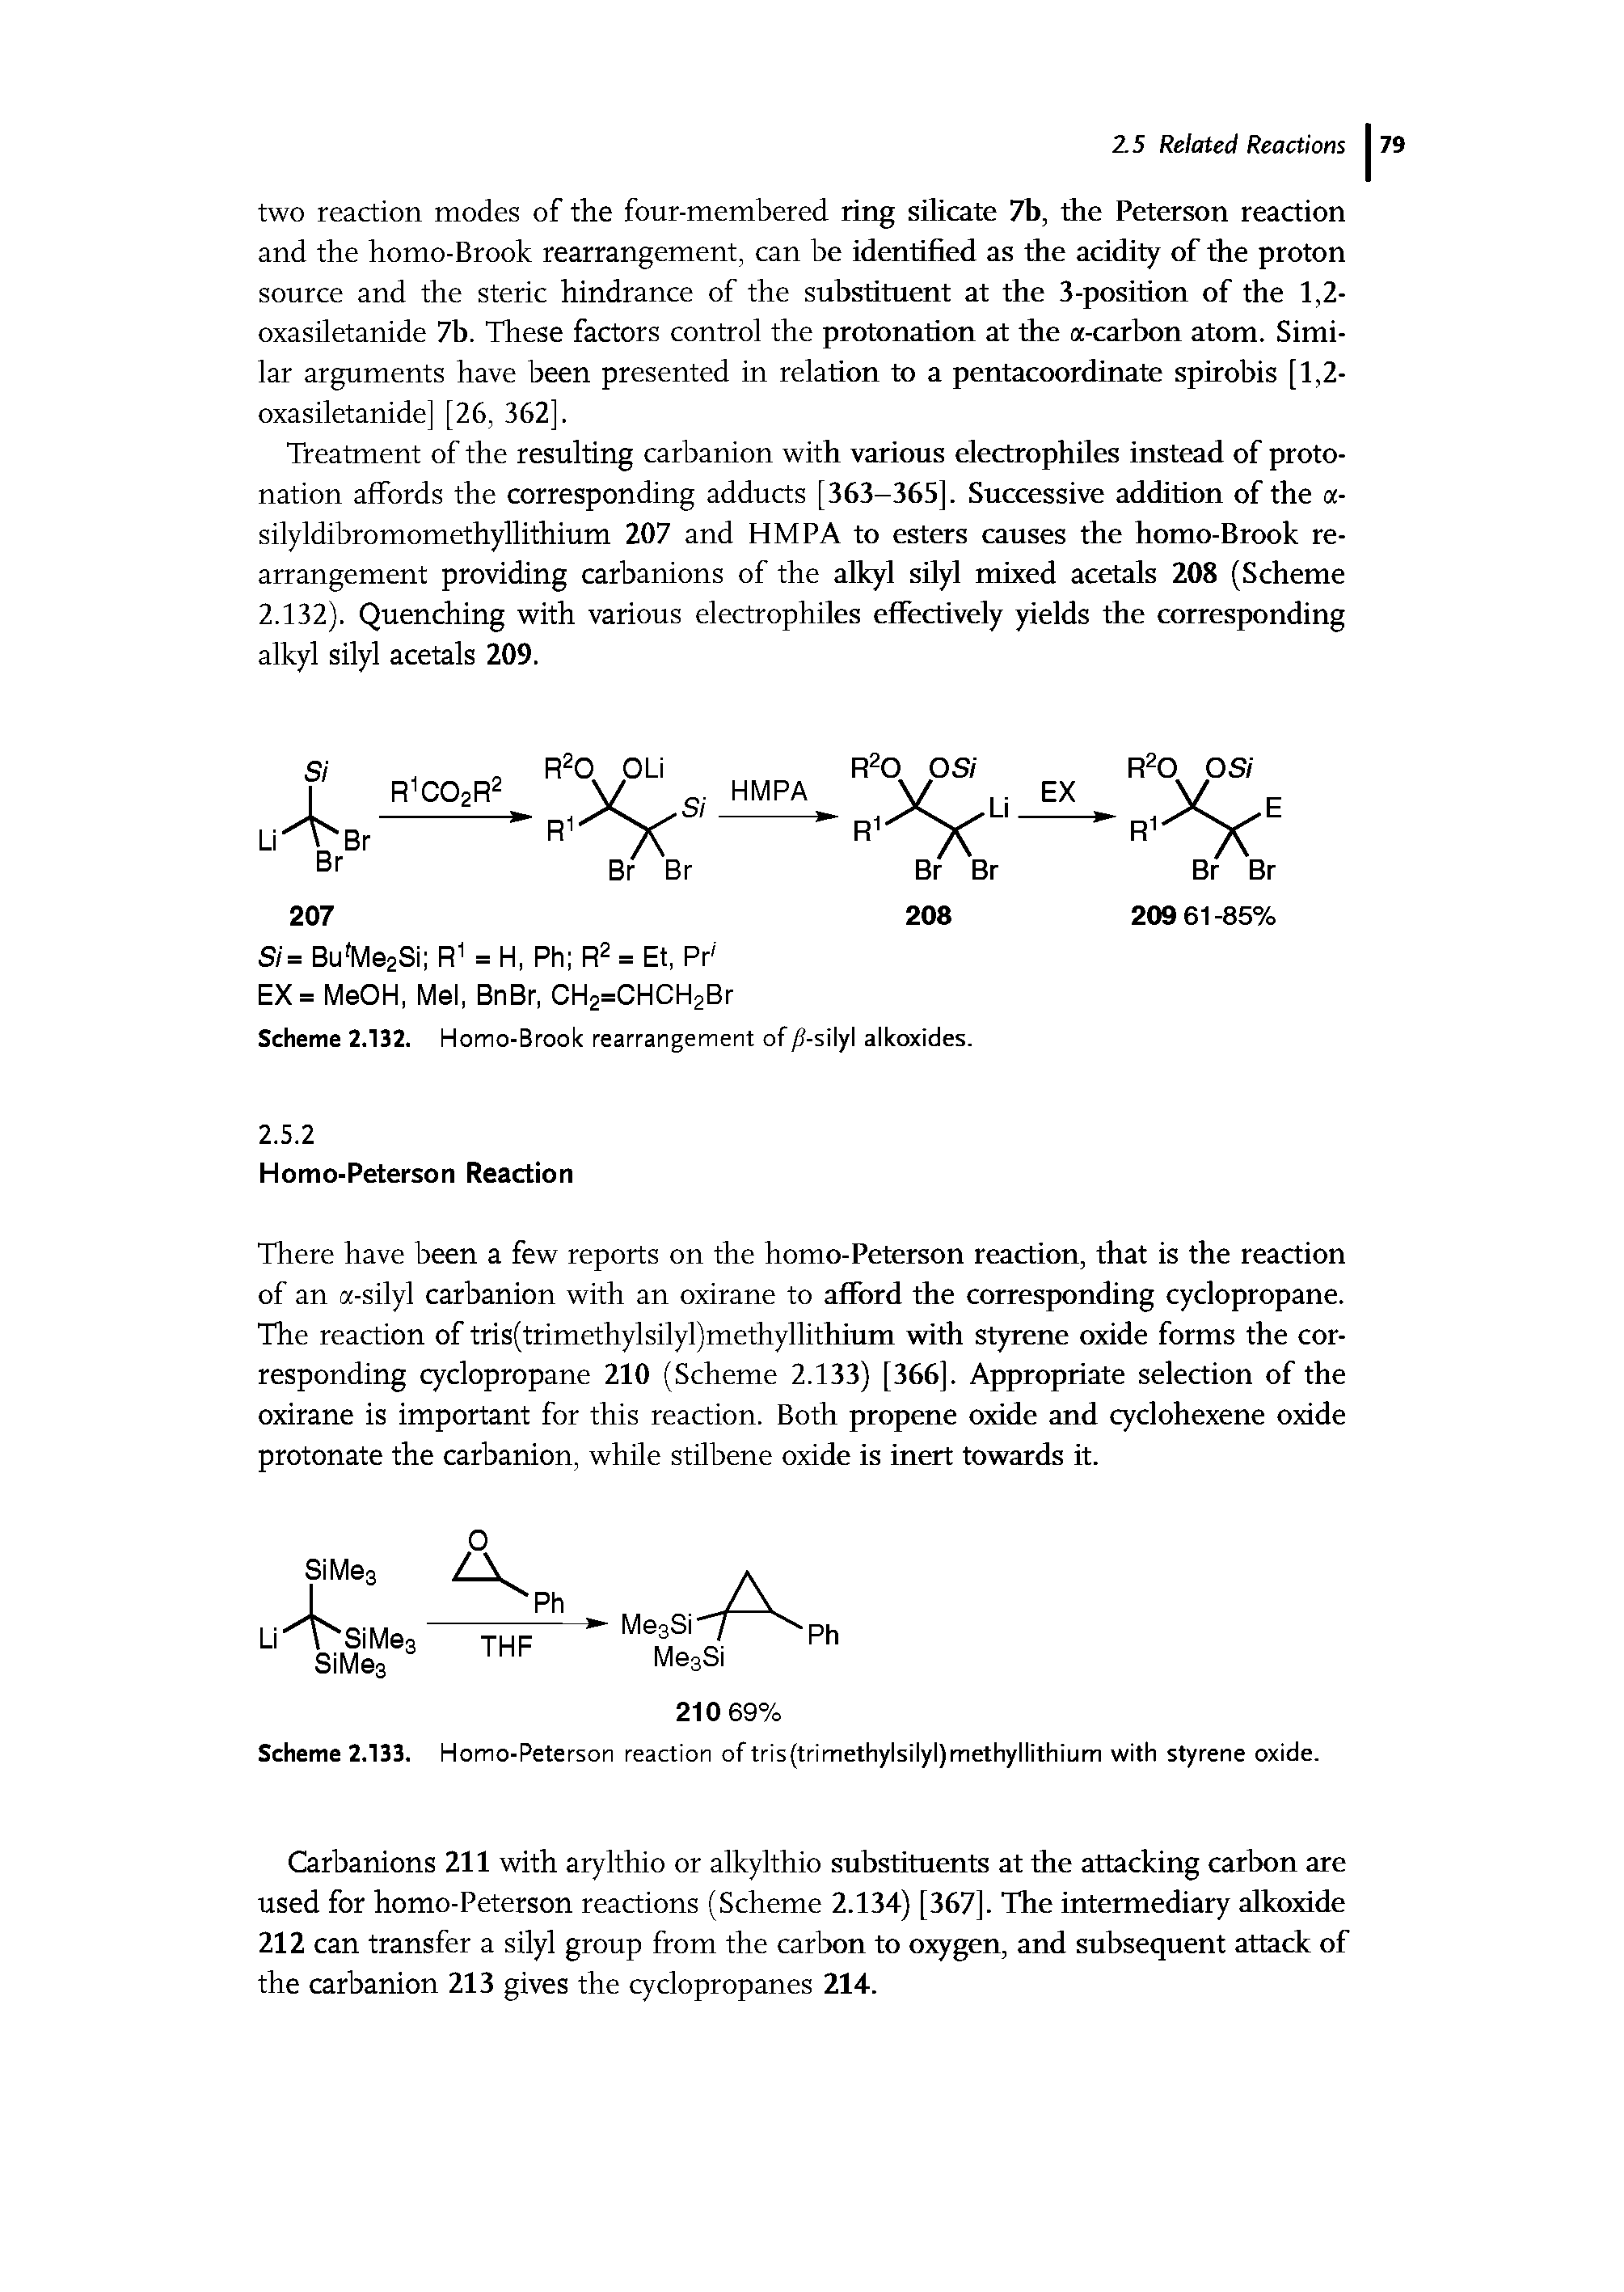 Scheme 2.133. Homo-Peterson reaction of tris(trimethylsilyl)methyllithium with styrene oxide.